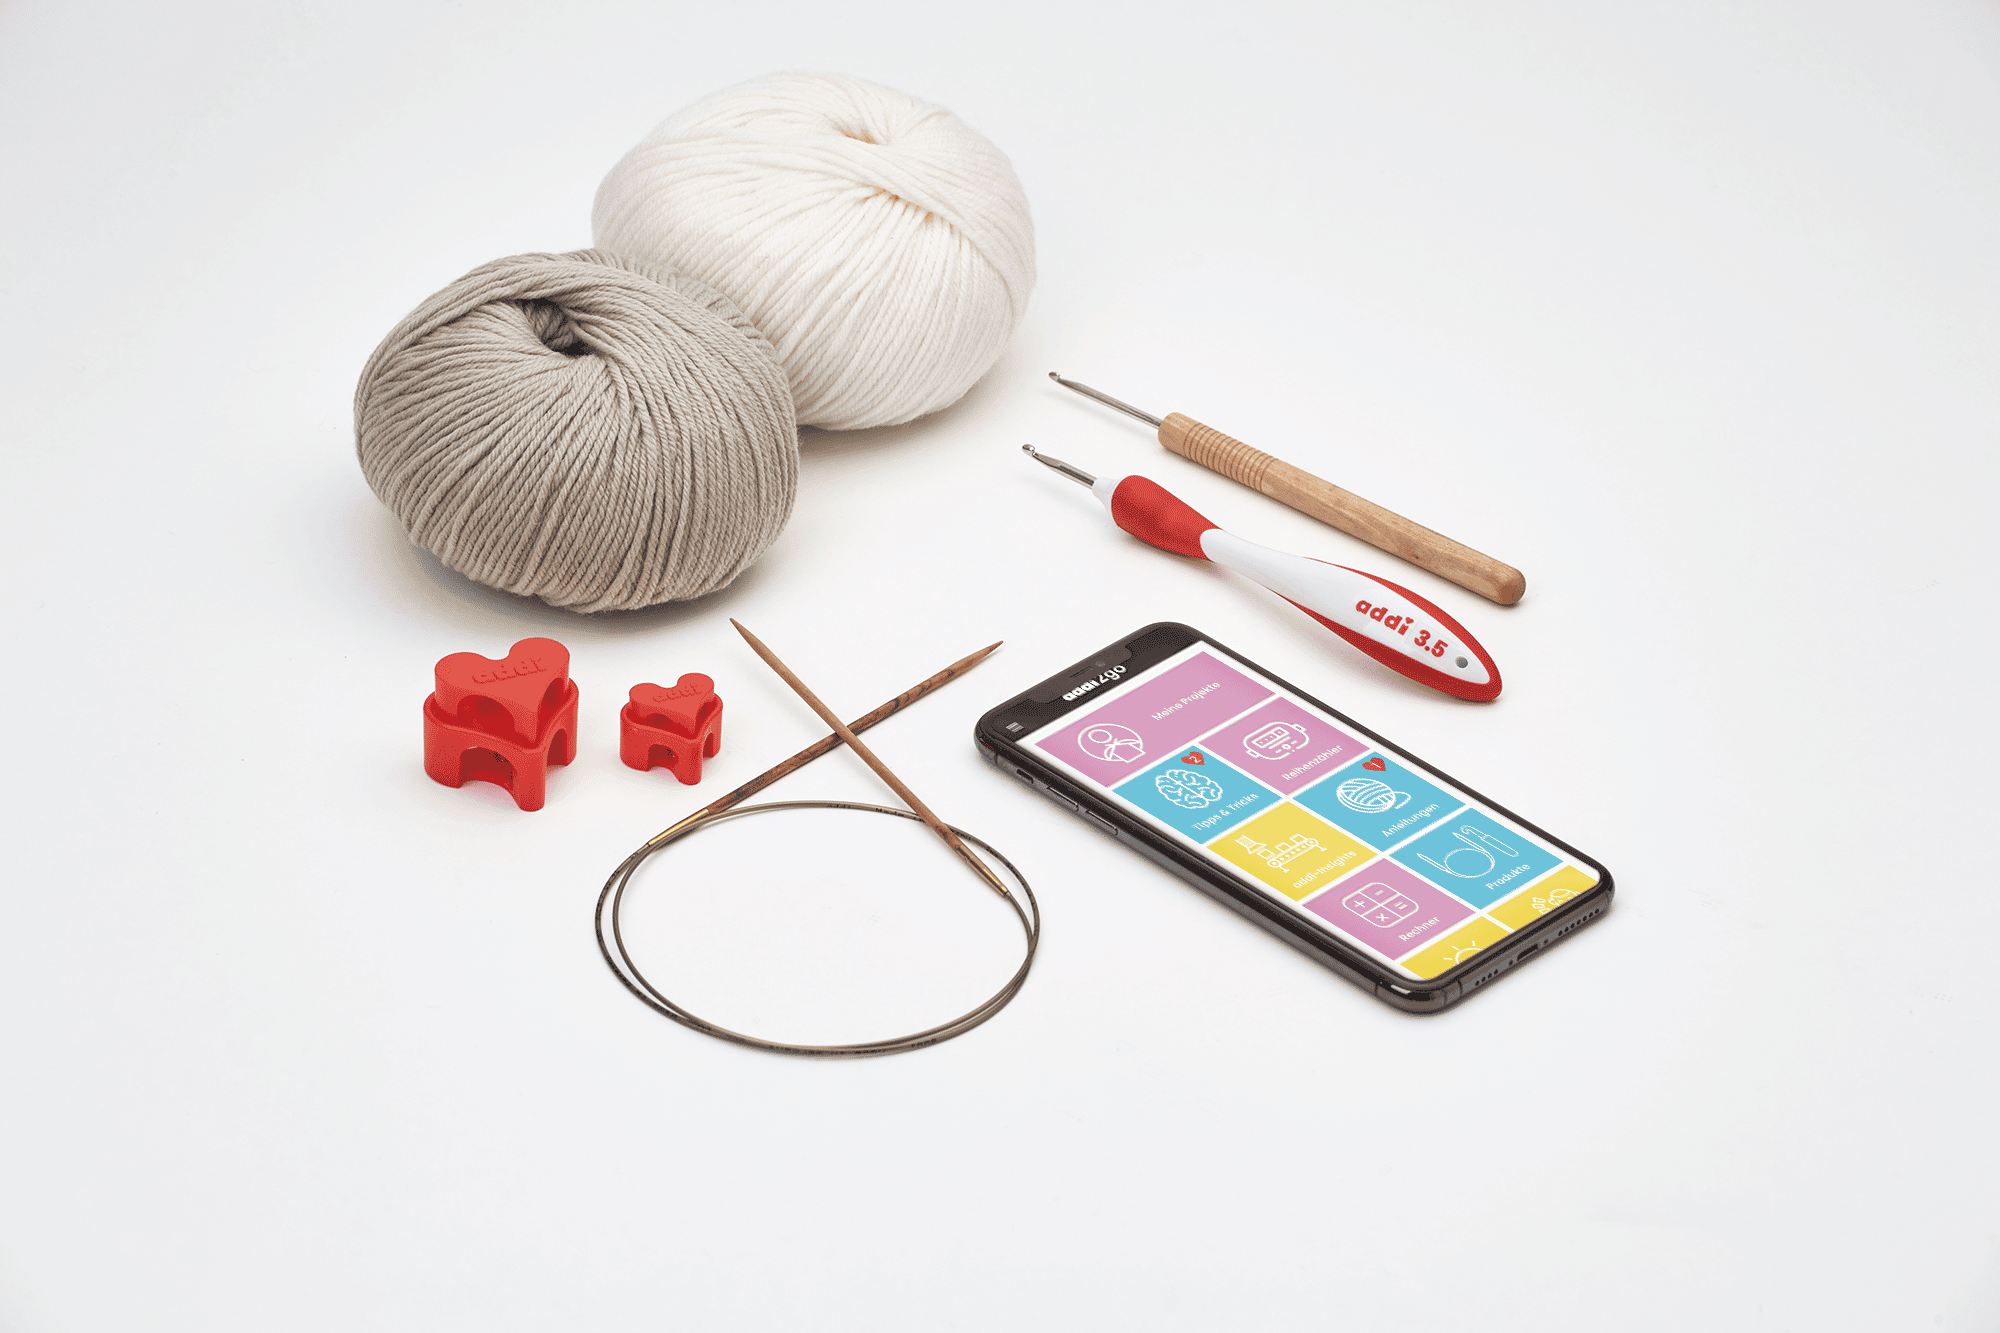 addi2go App digital knitting and crocheting assistant Handarbeitsassistent madeinGermany Stimmung rgb Yoga Socken stricken,sockenwunder anleitung